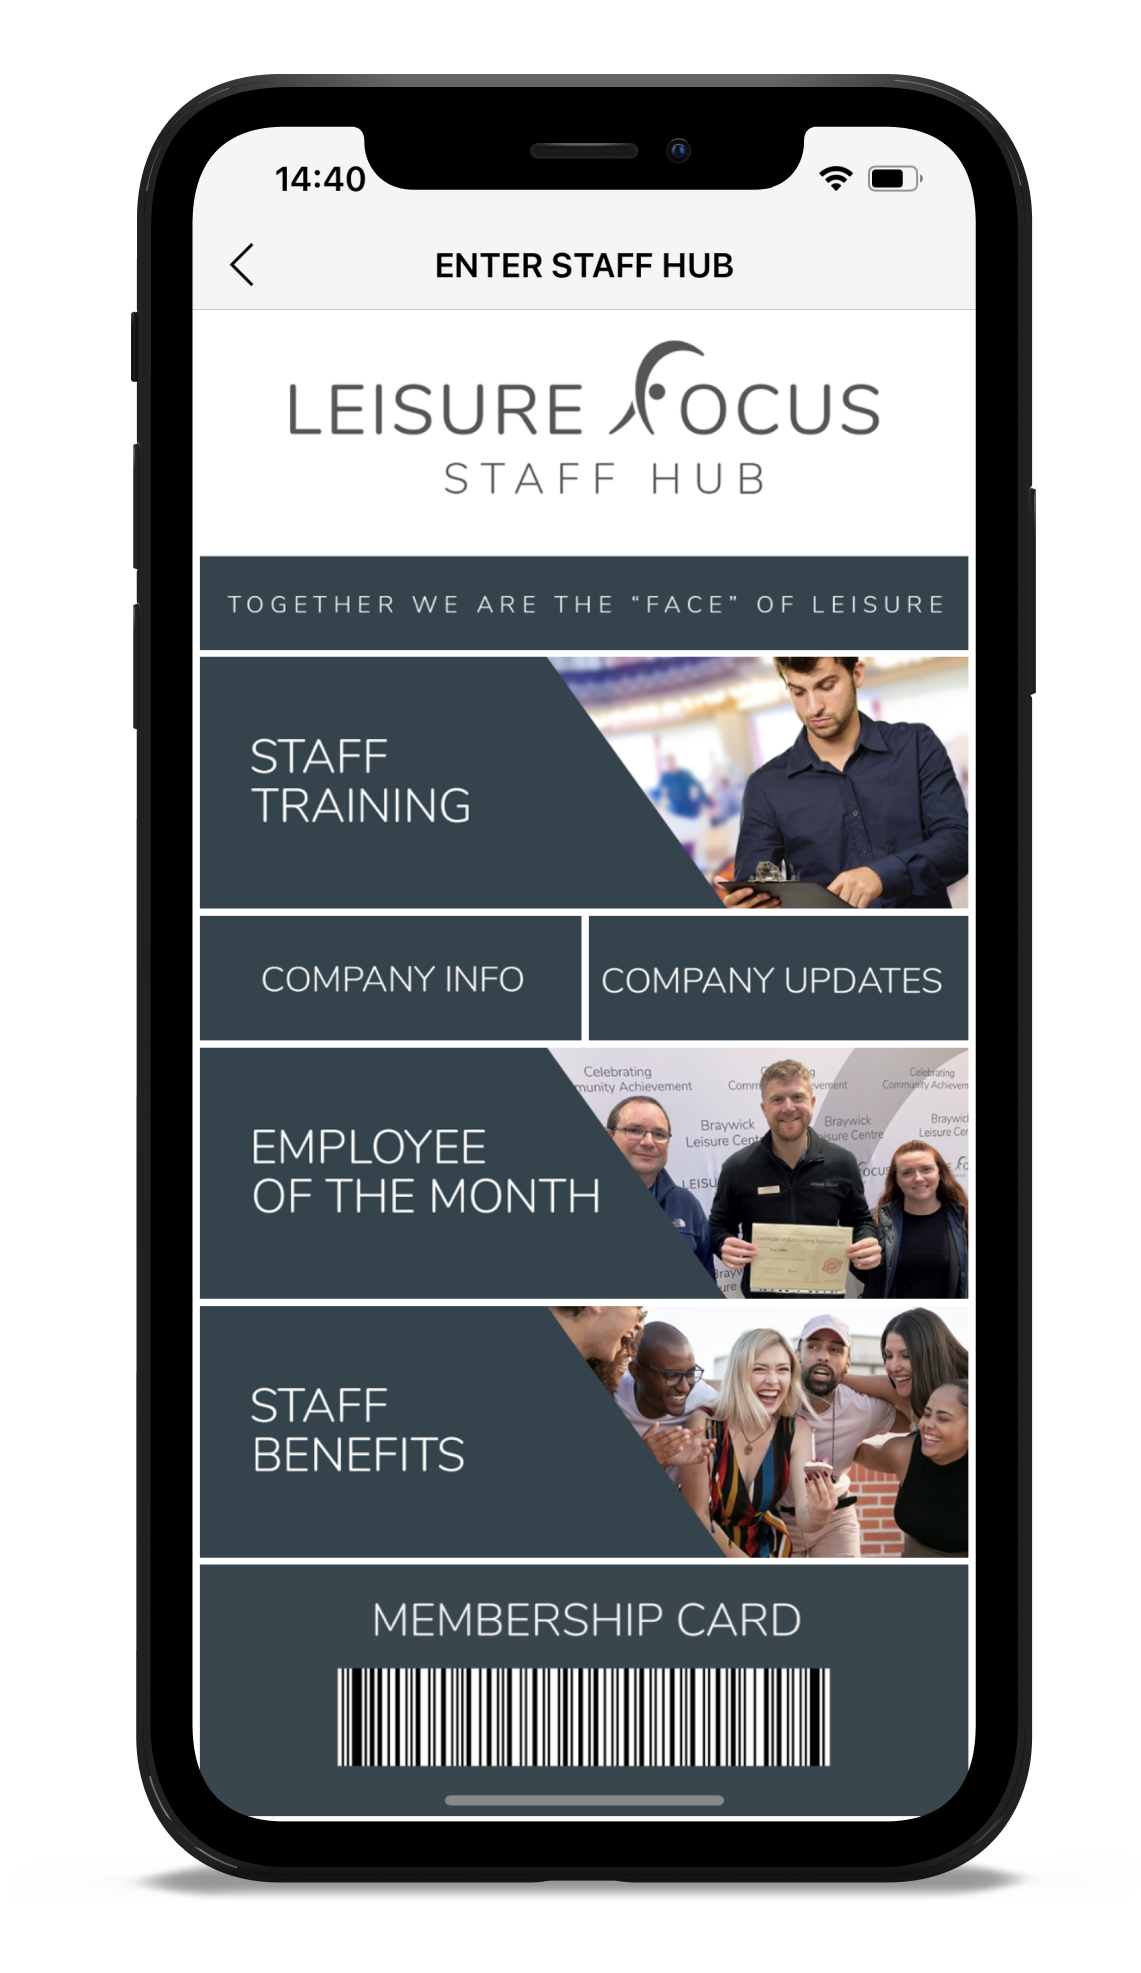 Leisure focus staff hub app design